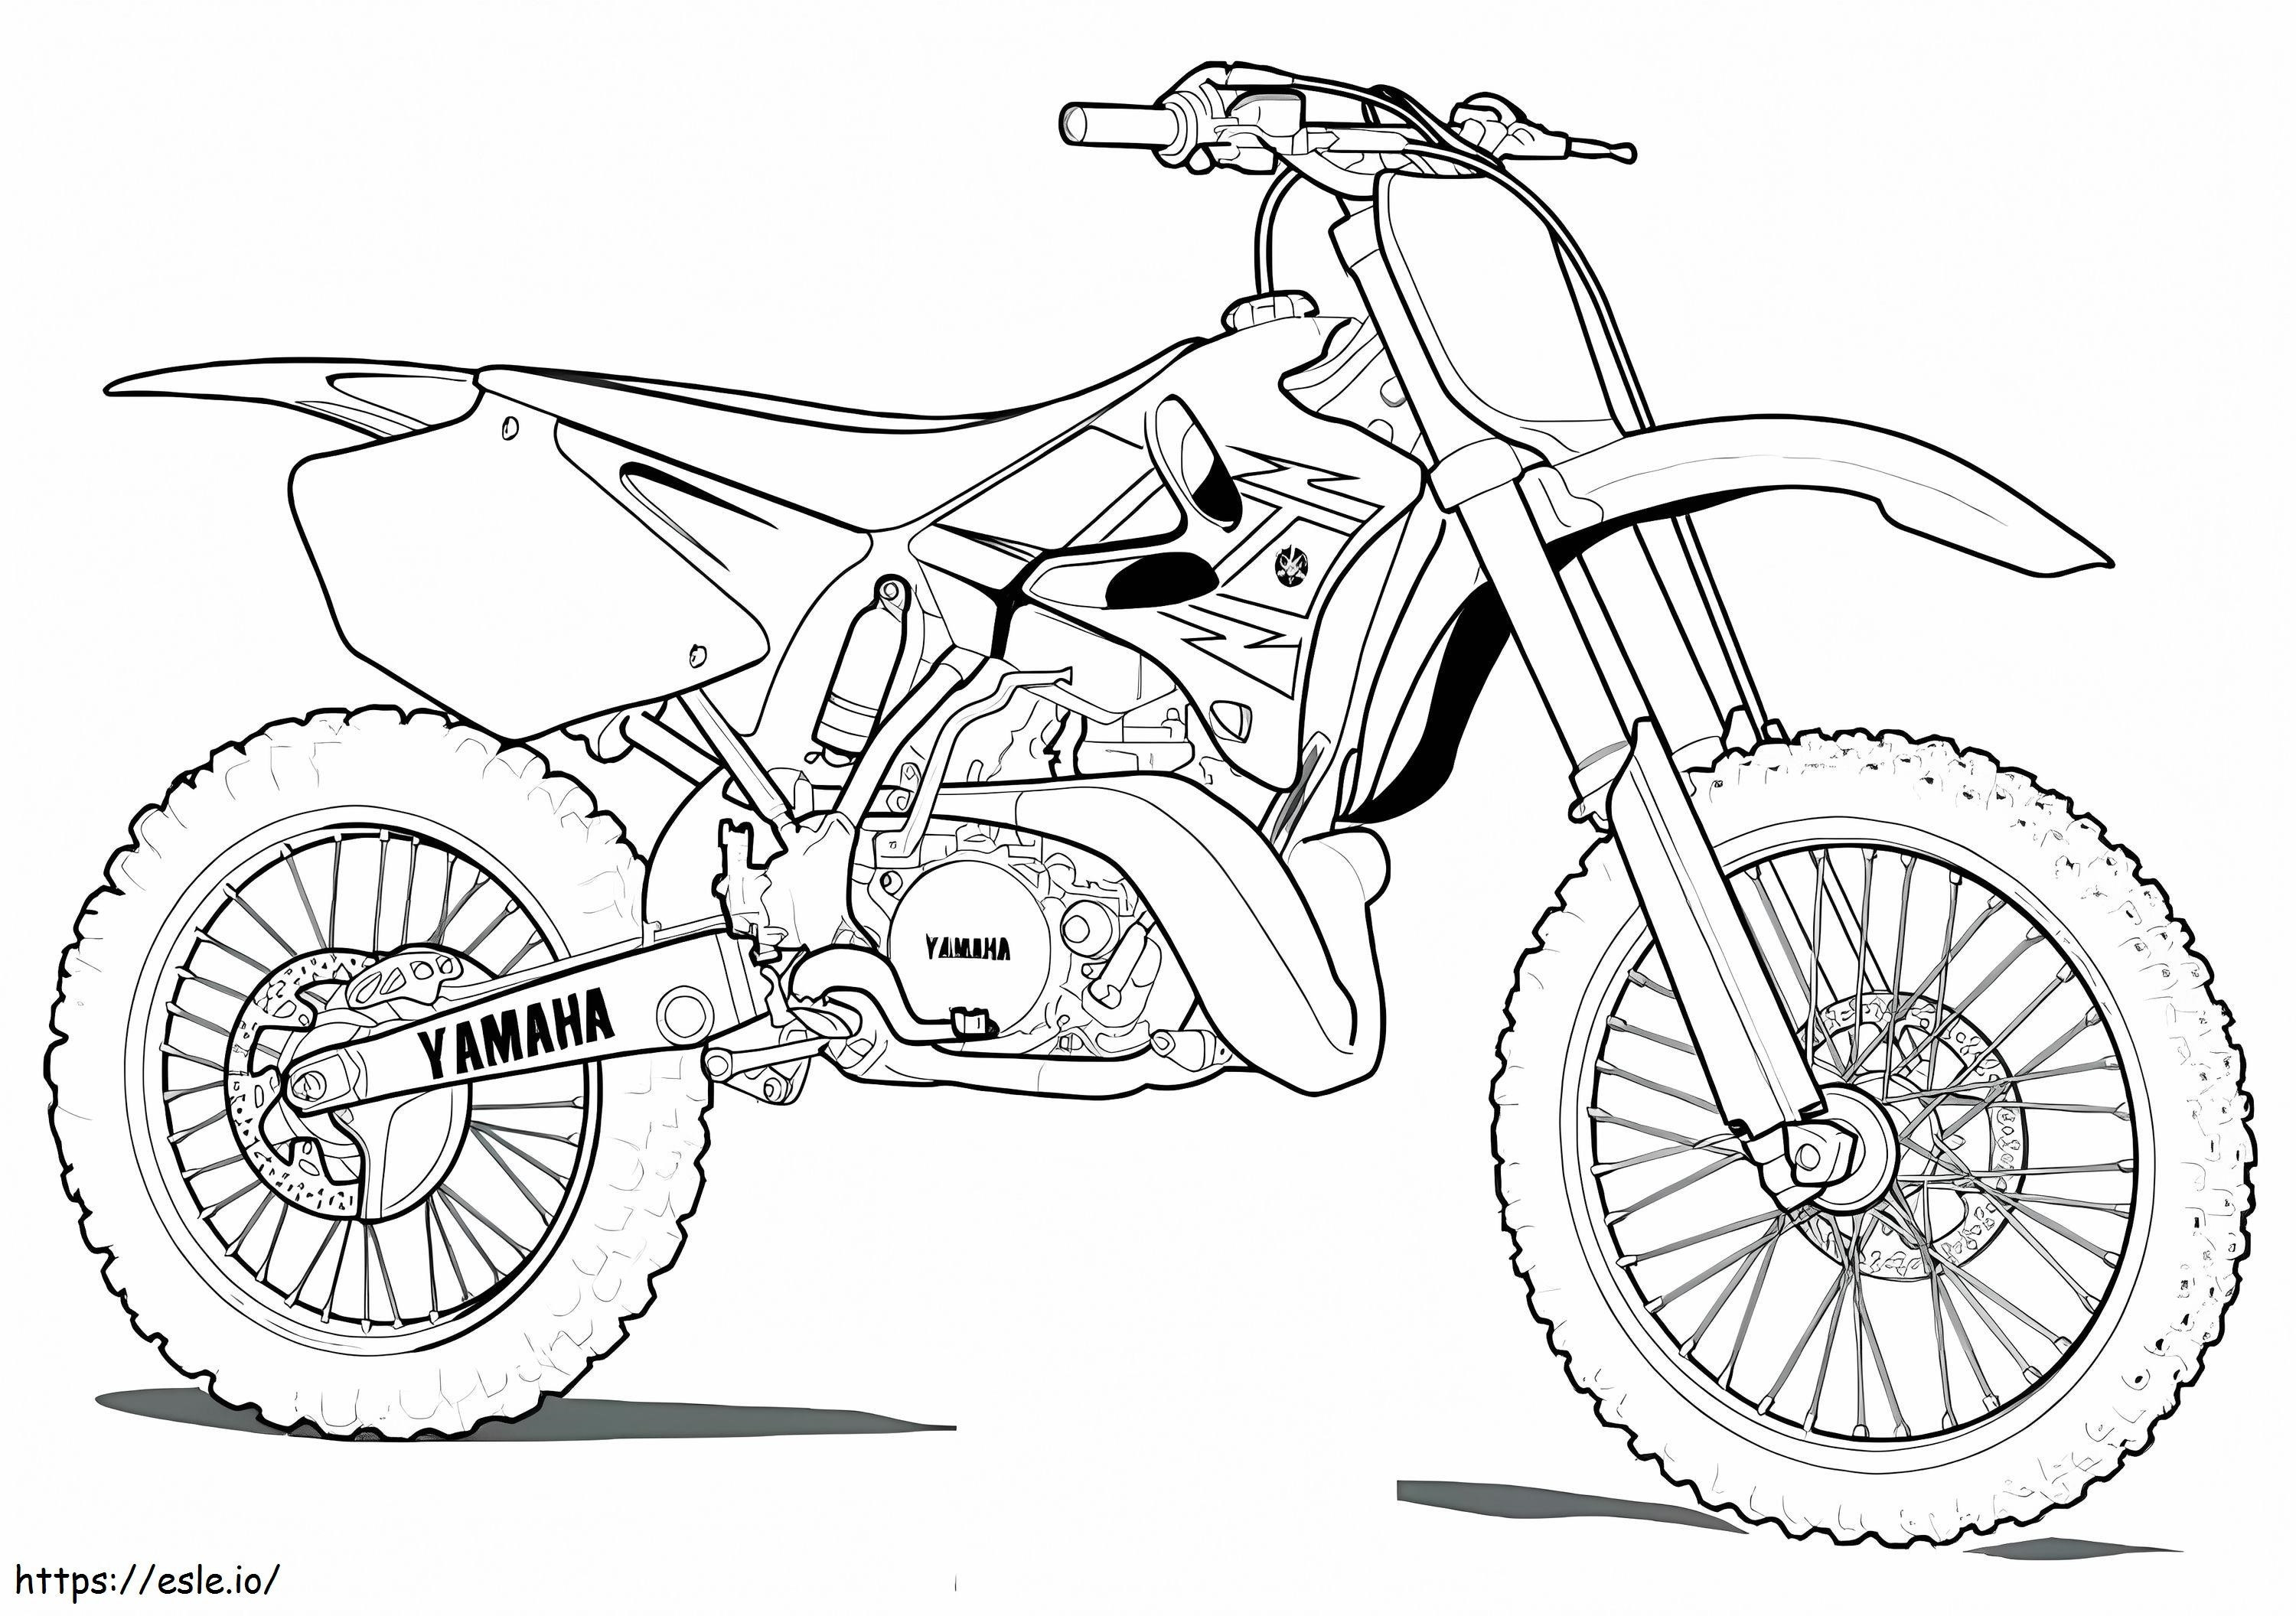 Dirtowy motocykl Yamaha kolorowanka